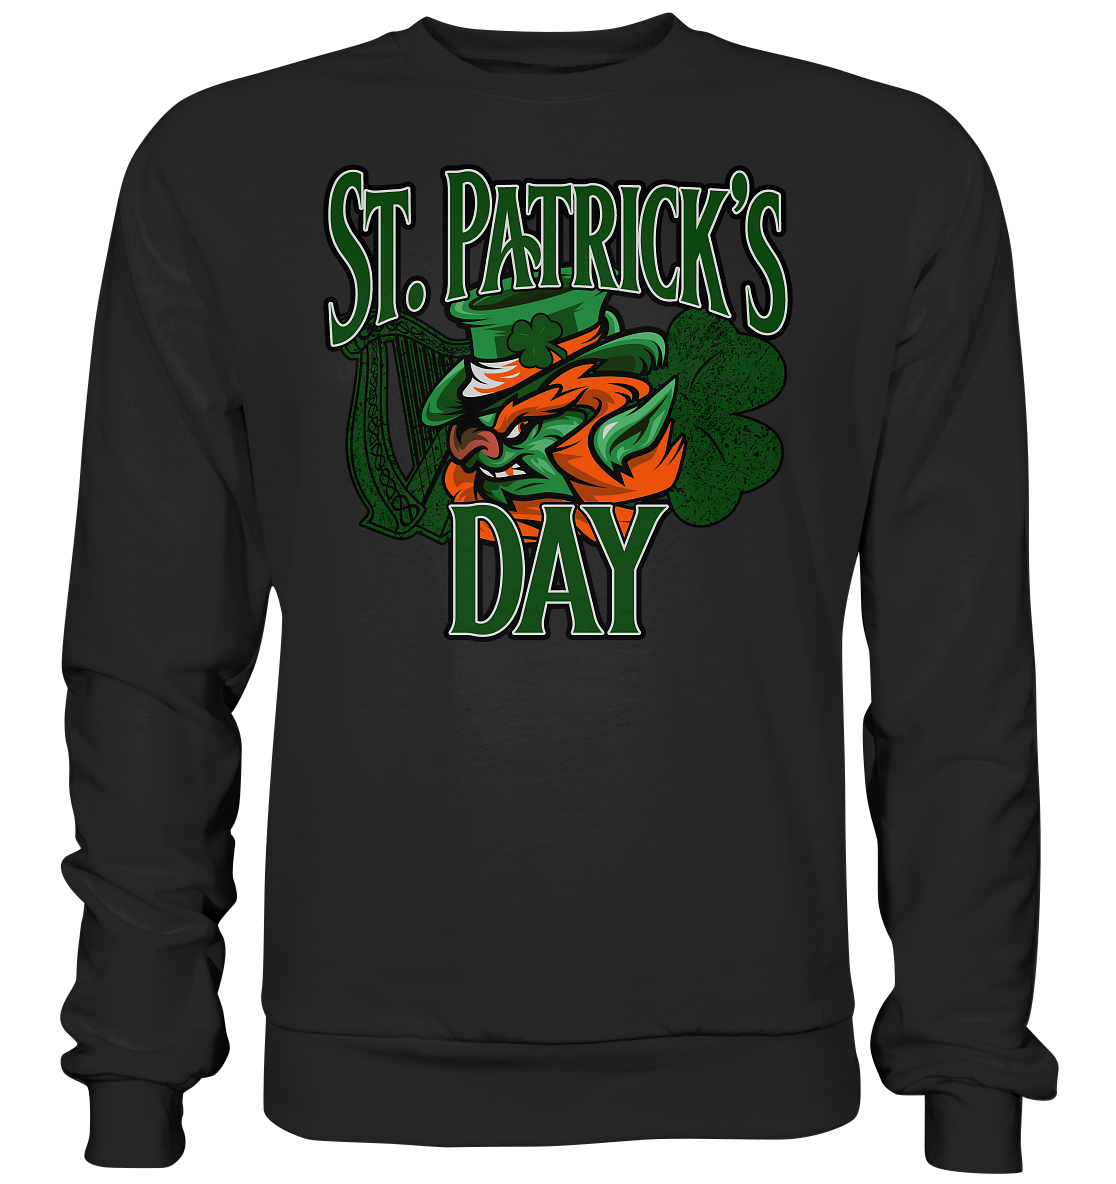 St. Patricks Day "Leprechaun" - Premium Sweatshirt